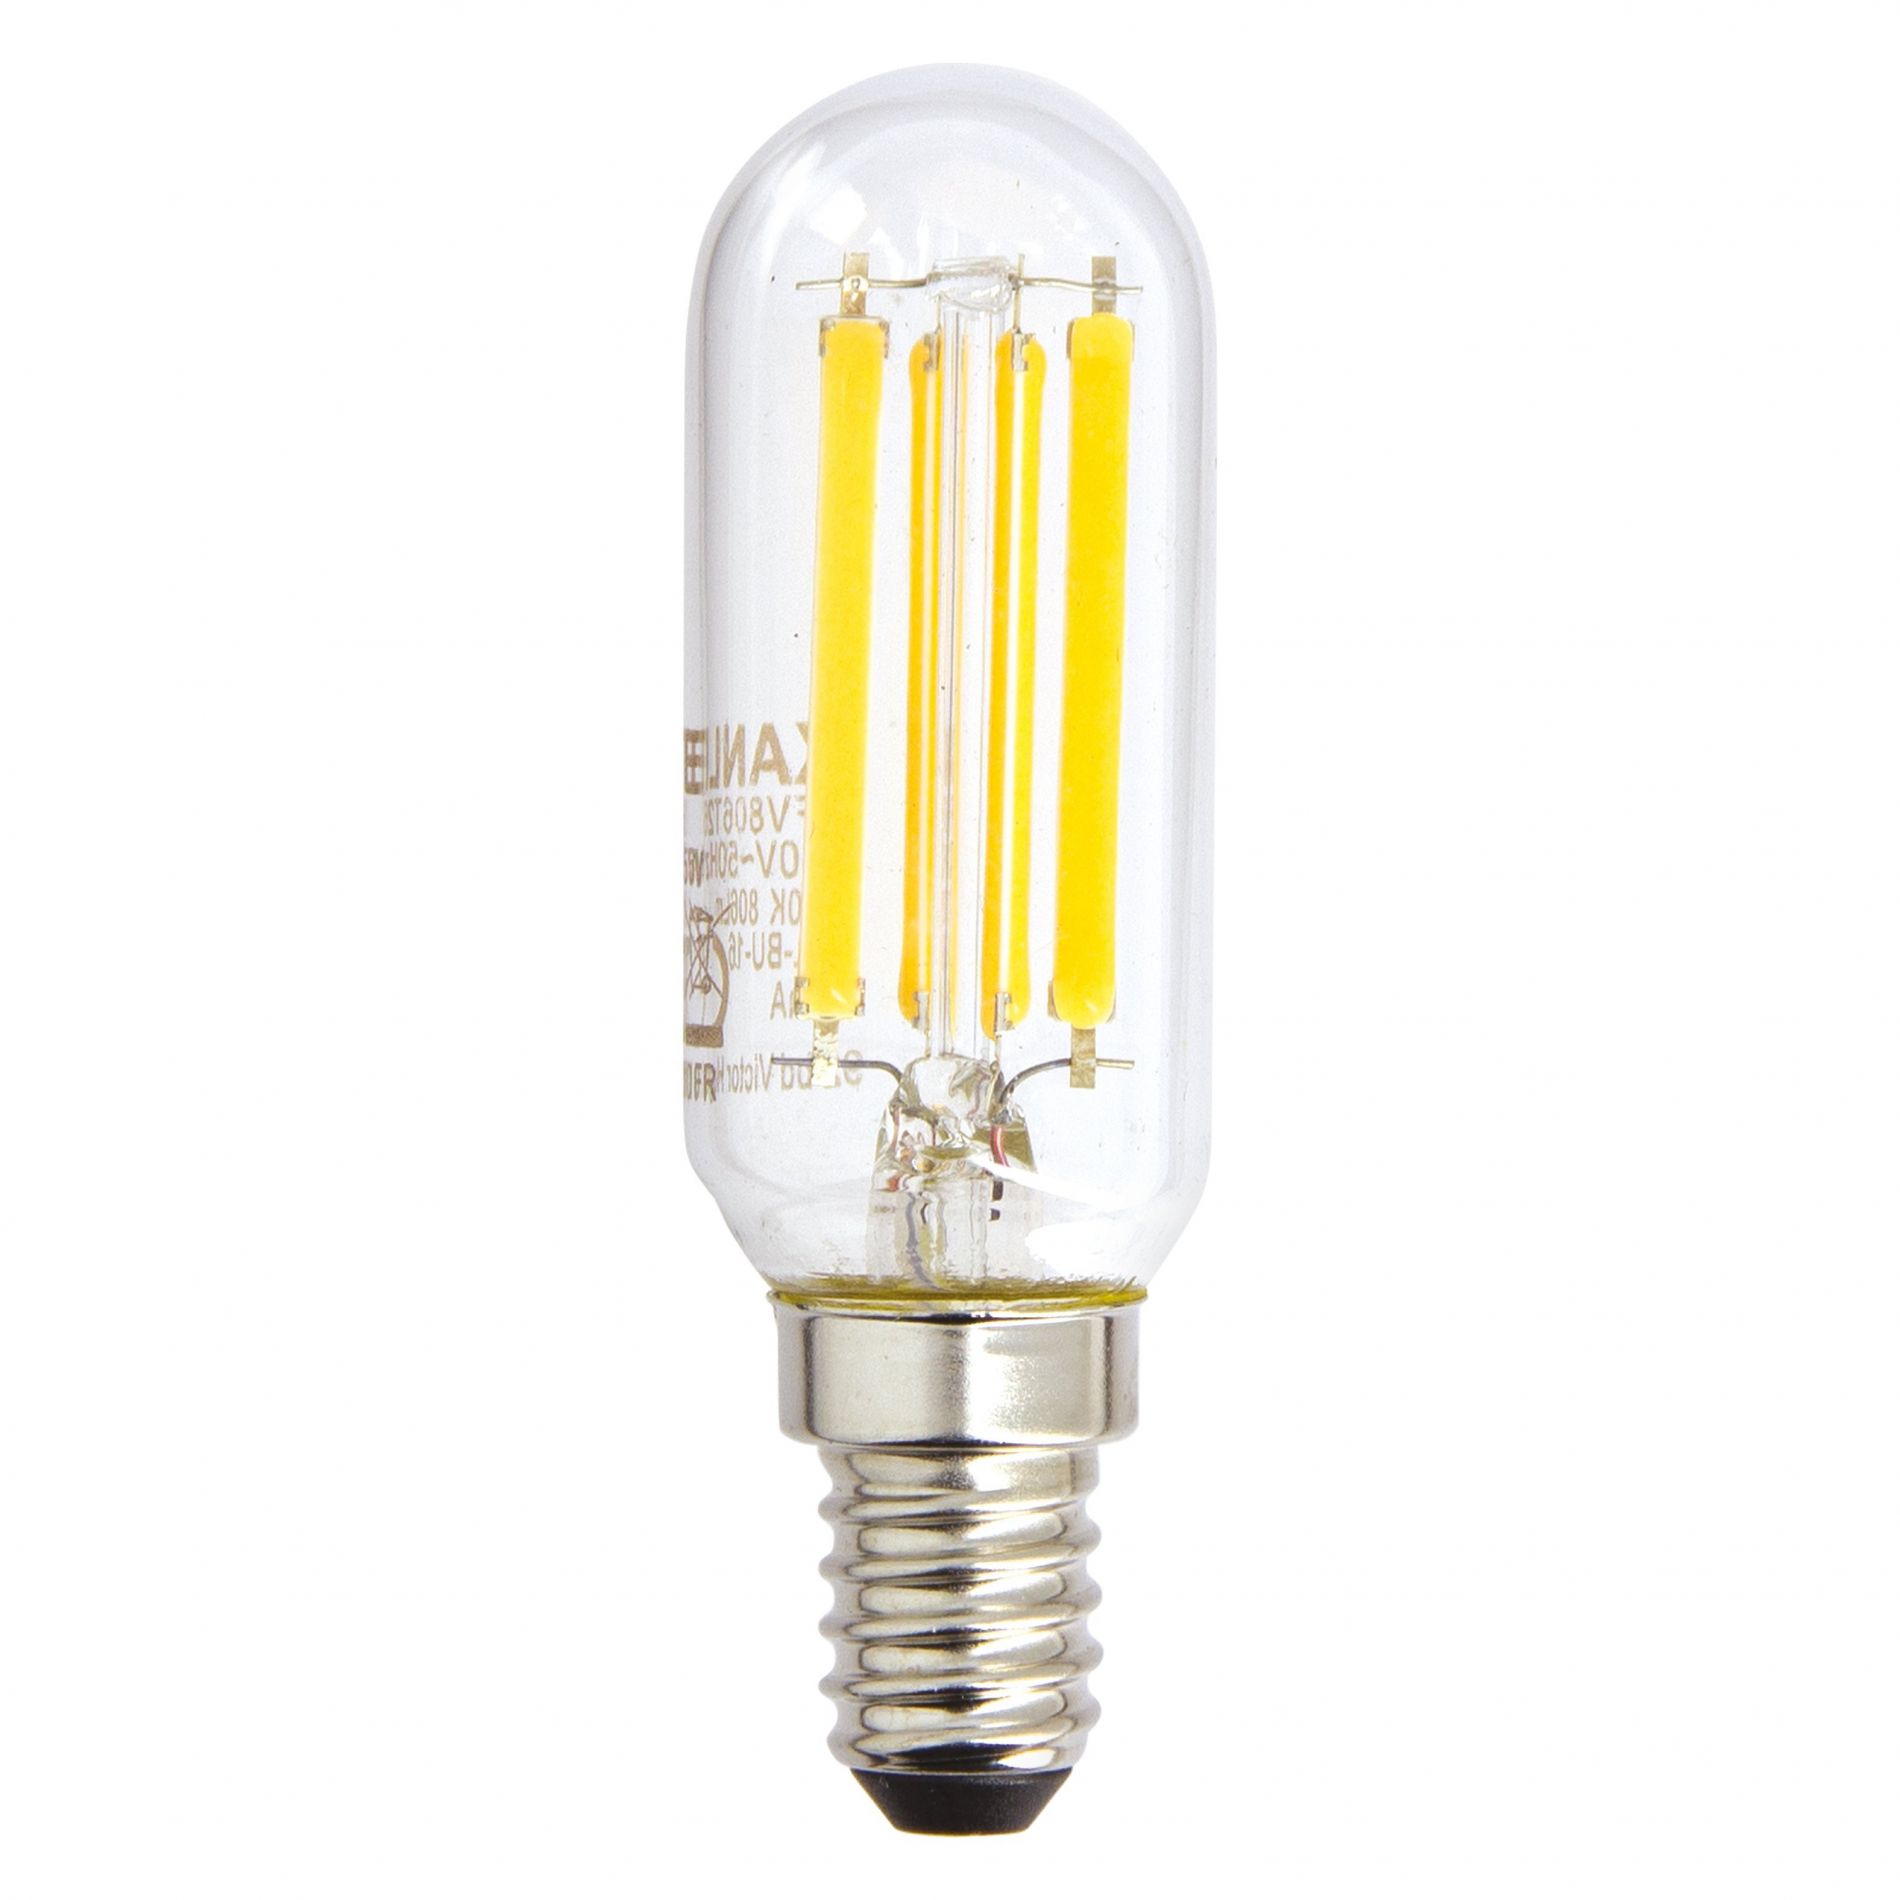 DESIGN LINE Ampoule LED Fridge Lamp Curved clear 2200 K E14 60 lm - Segula  LED SG-50155